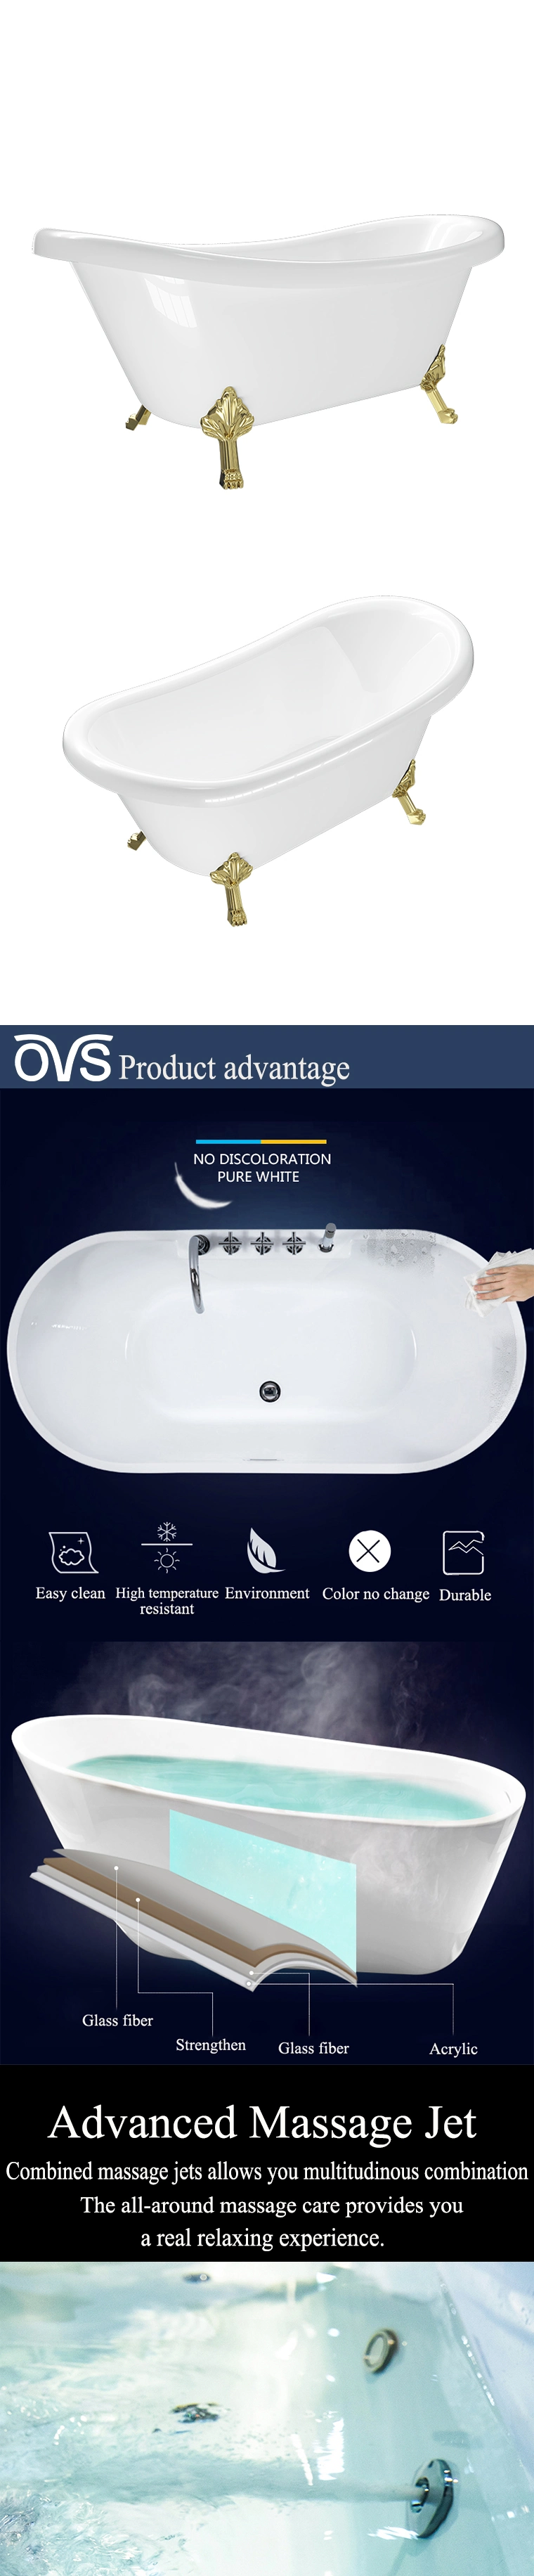 Golden Clawfoot Non-Whirlpool Freestanding White Acrylic Bathtub